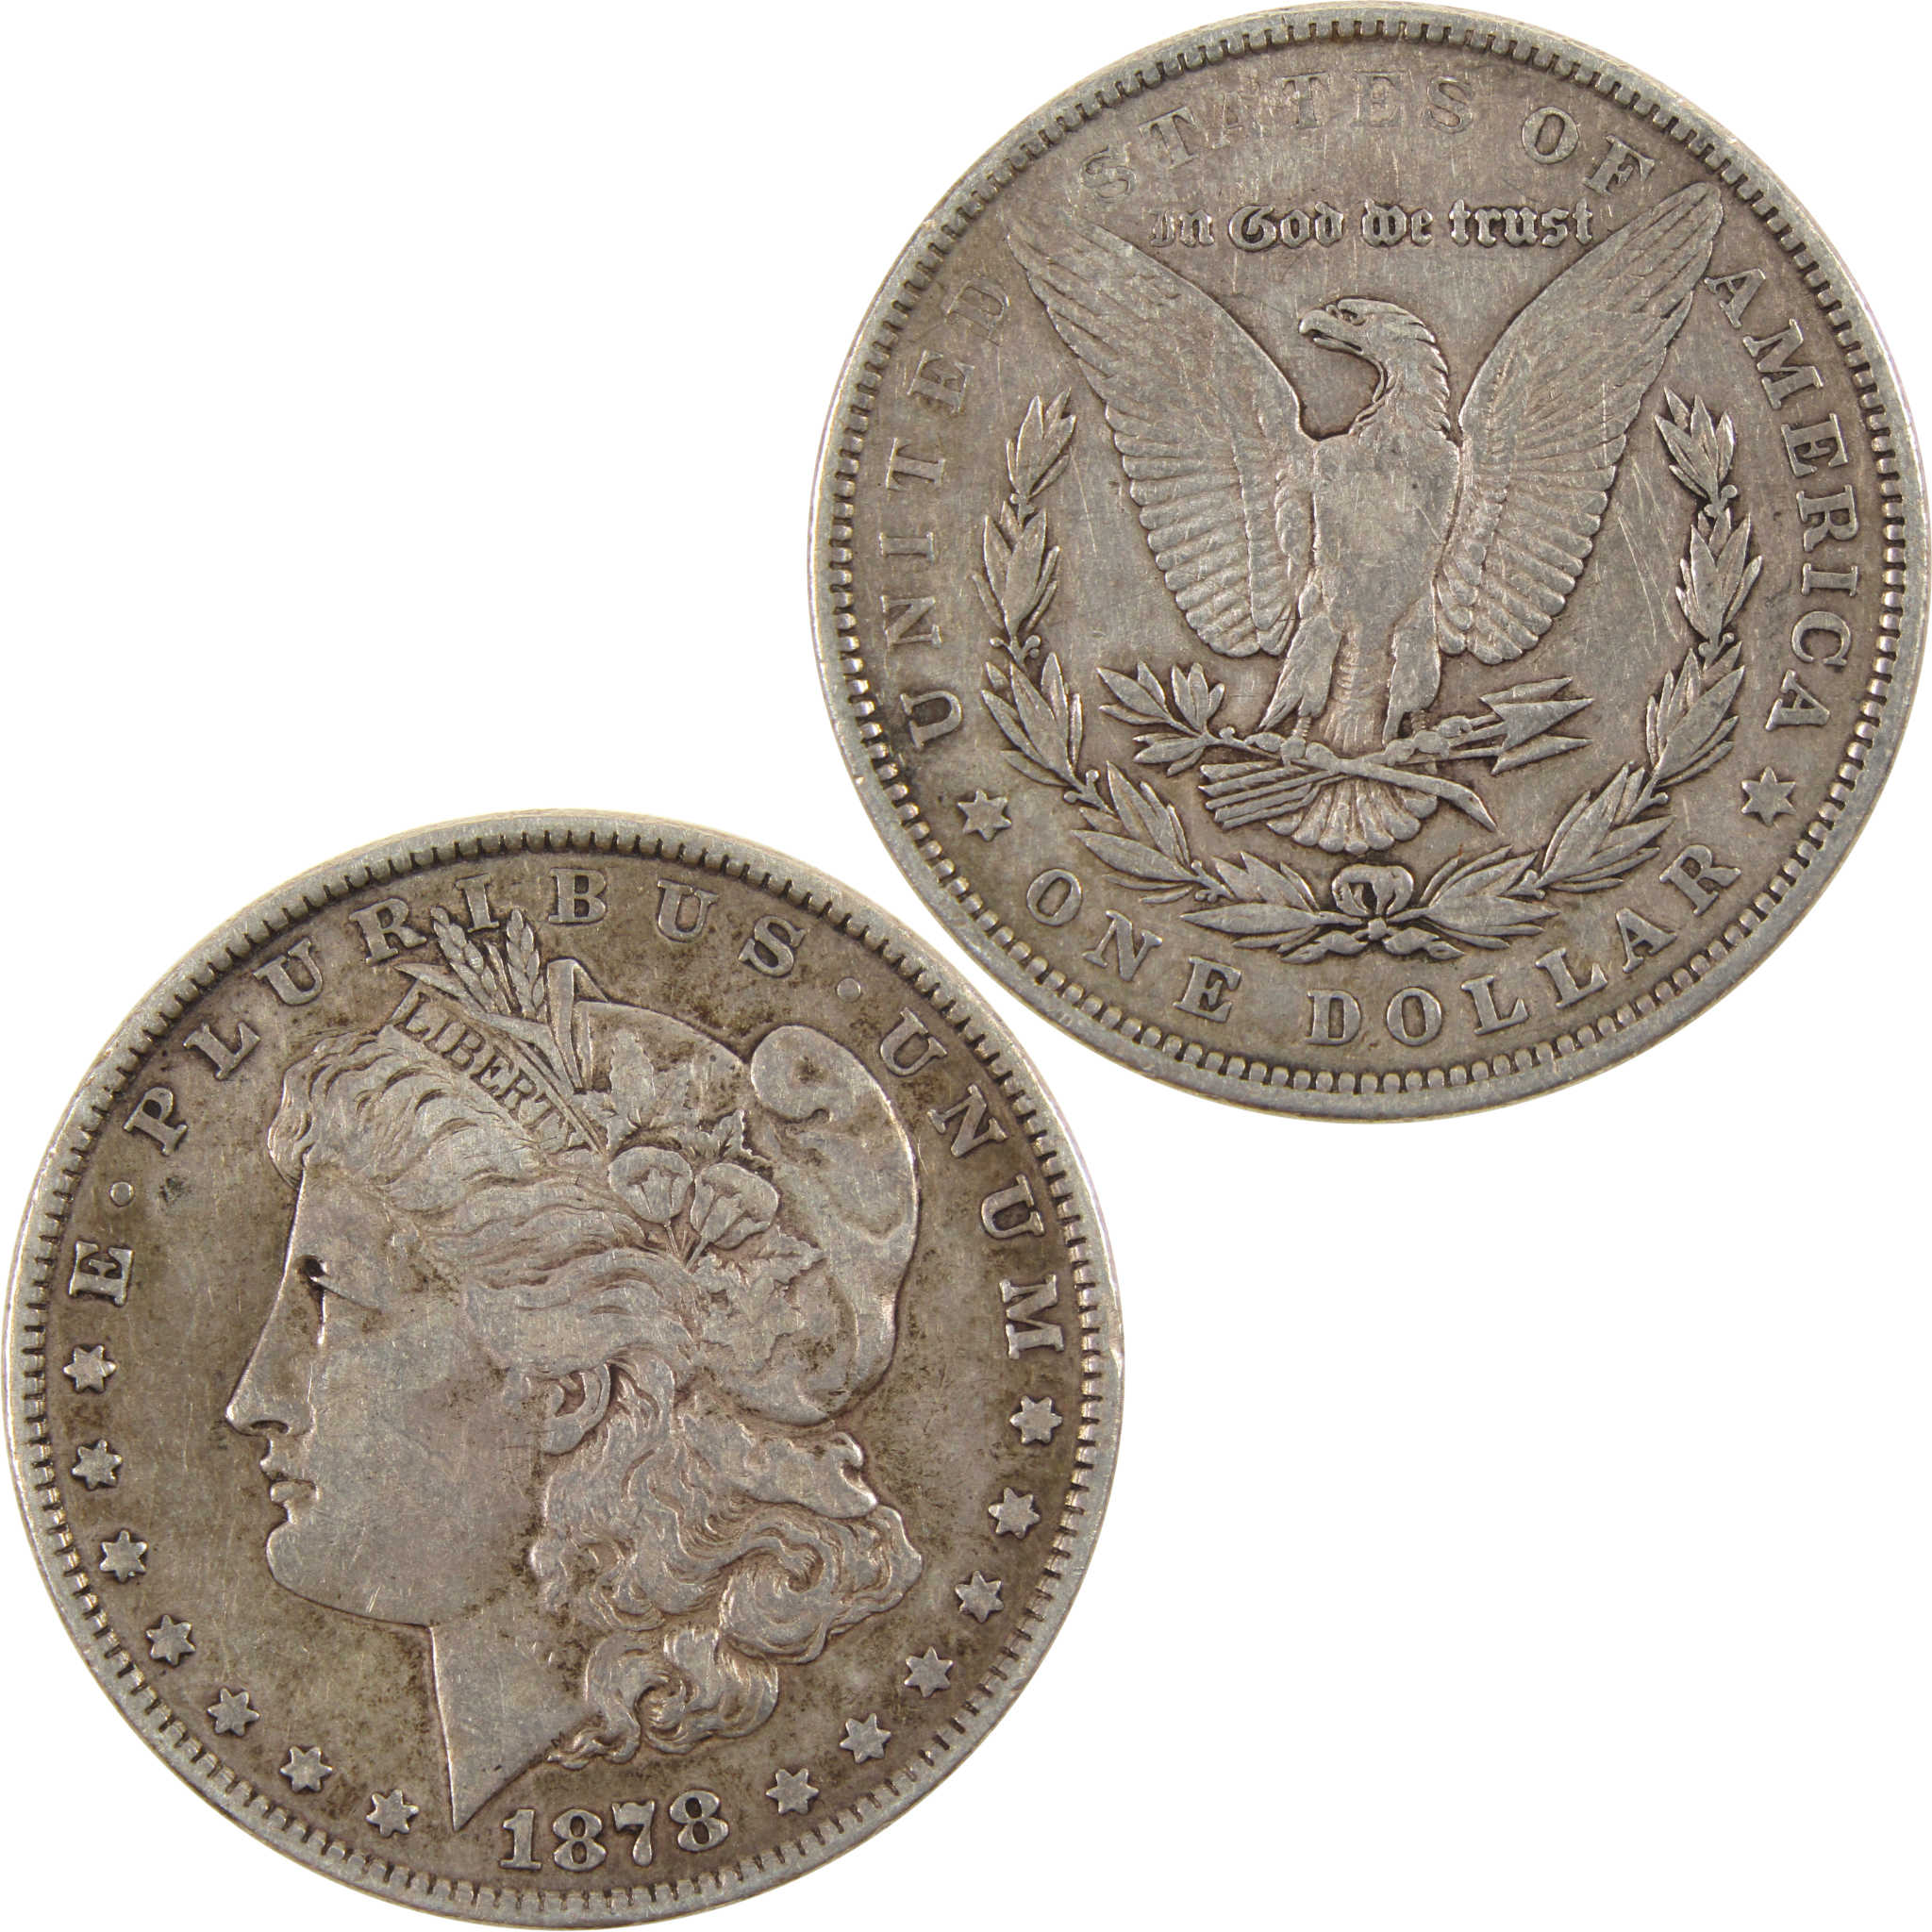 1878 7TF Rev 79 Morgan Dollar VF Very Fine Silver $1 Coin SKU:I9160 - Morgan coin - Morgan silver dollar - Morgan silver dollar for sale - Profile Coins &amp; Collectibles